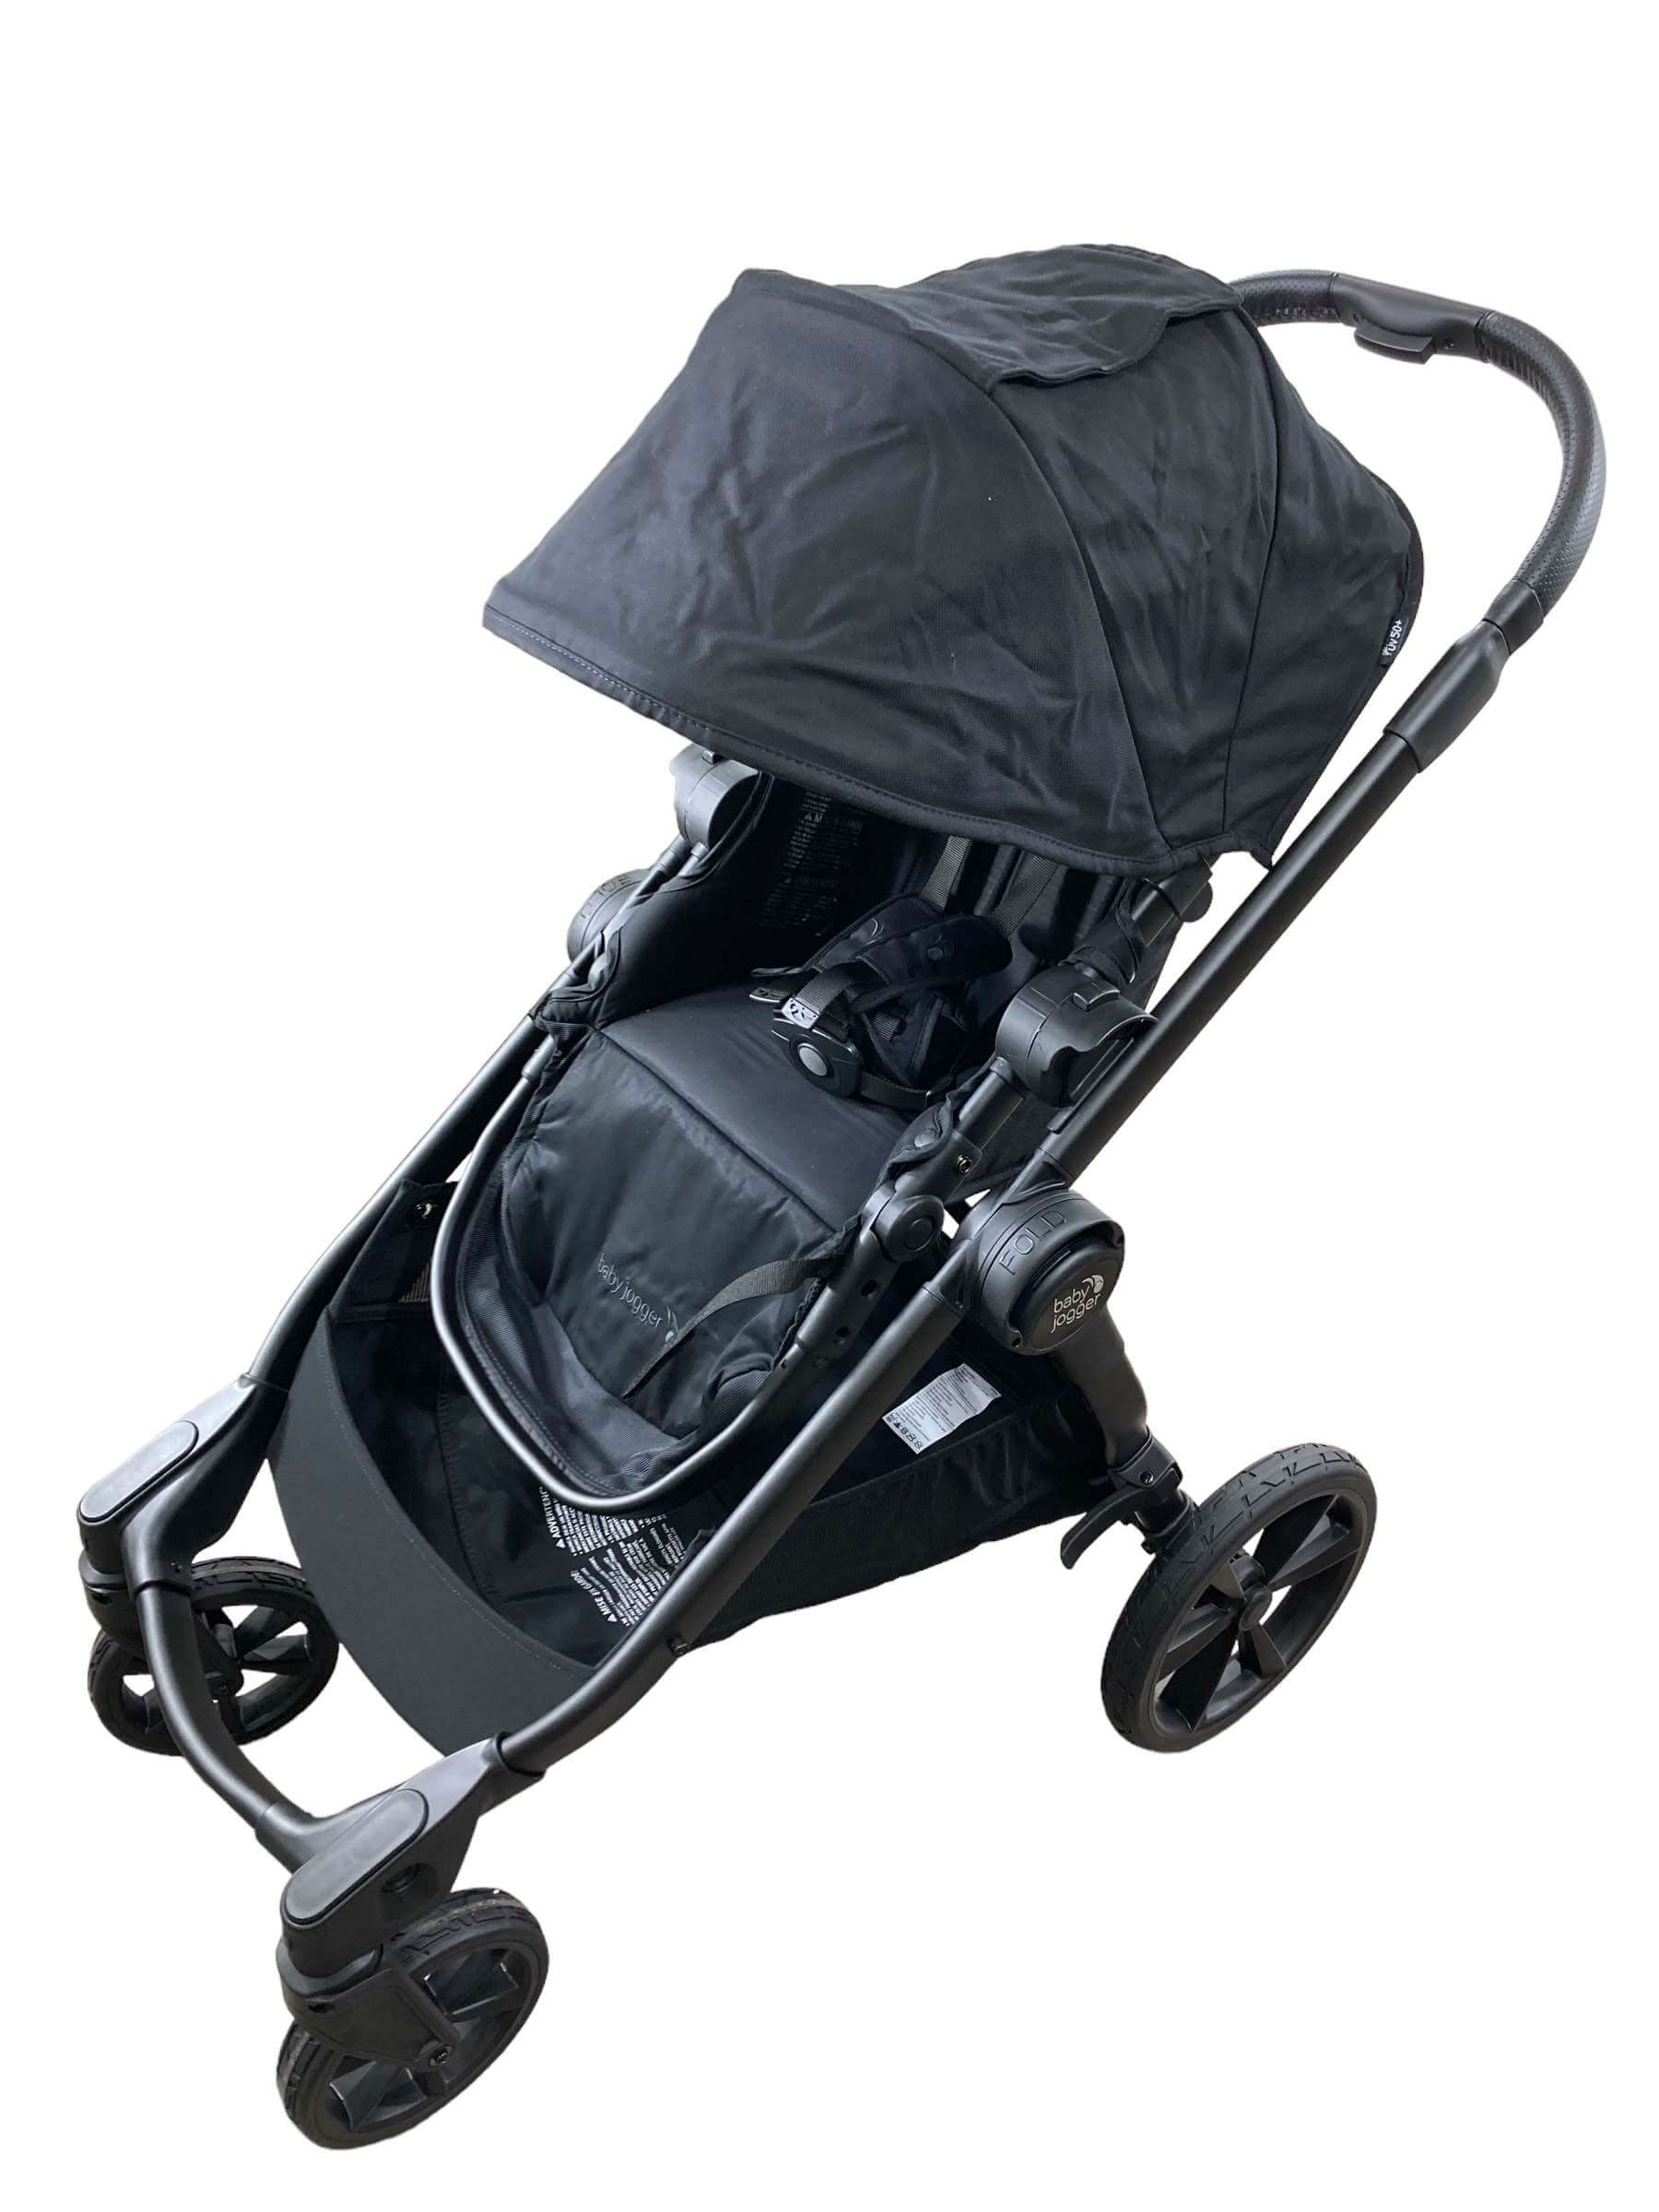 Baby Jogger City Select 2 Stroller, Eco Collection Lunar Black, 2021